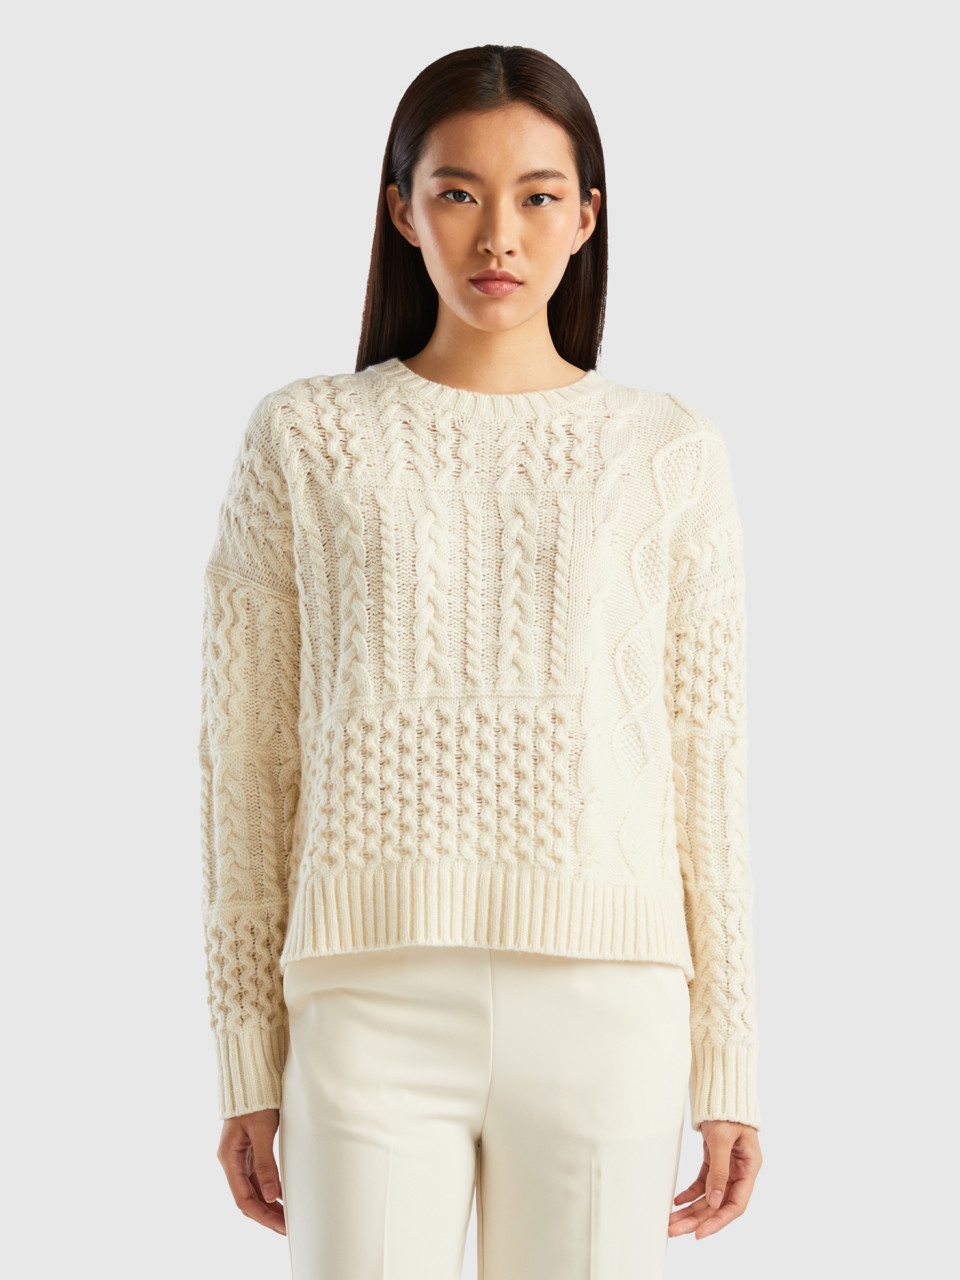 Benetton, Knit Patchwork Sweater, Creamy White, Women